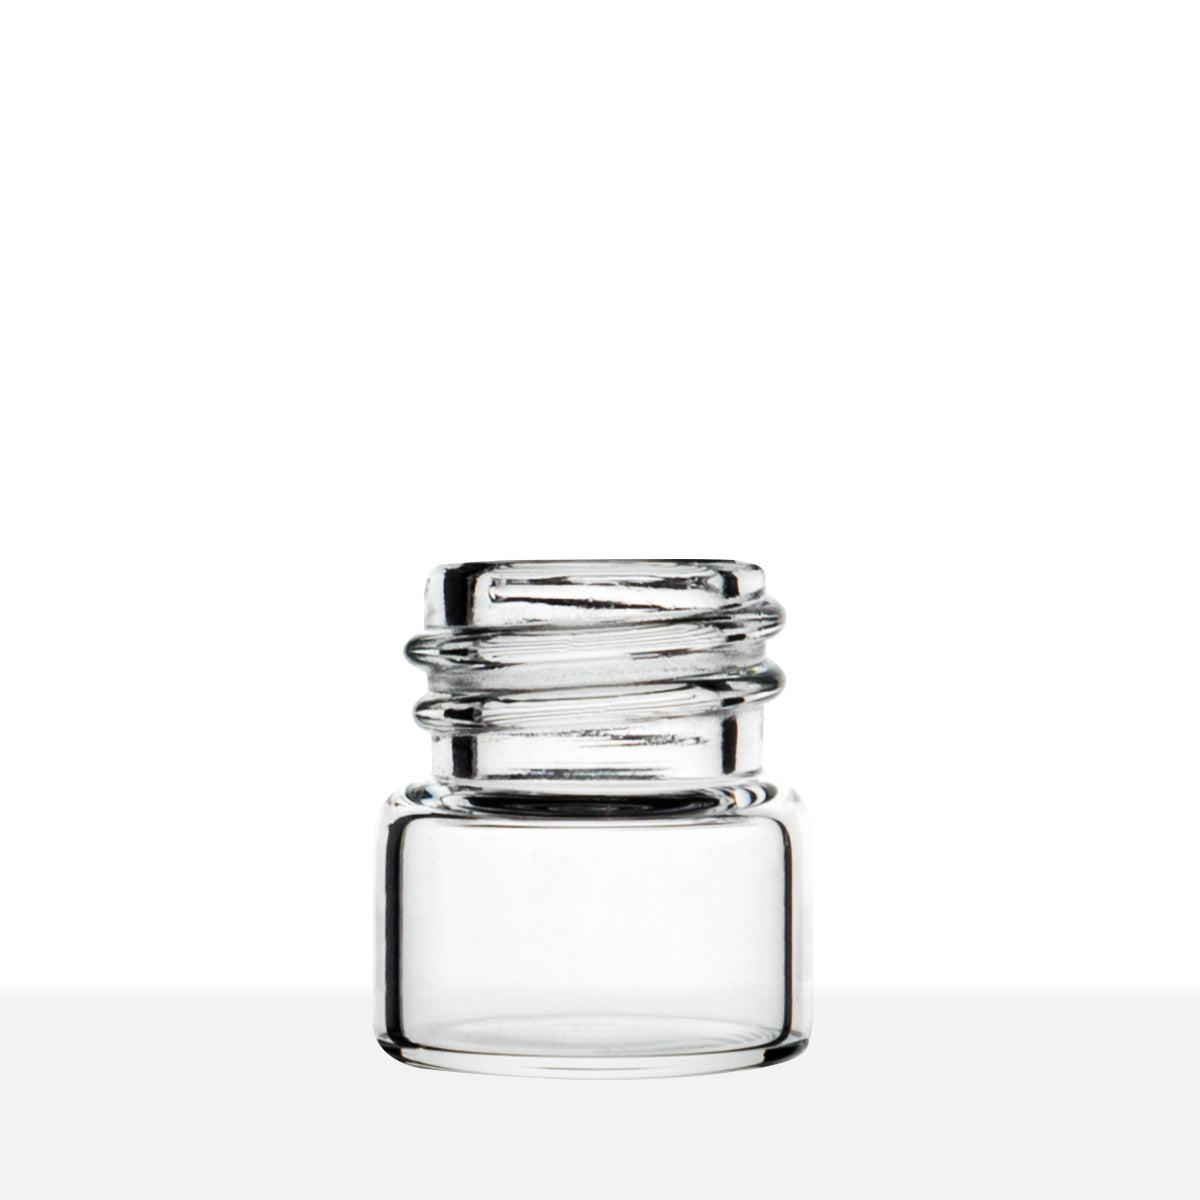 SCREW THREAD GLASS VIALS - CLEAR Item #:VC131517G